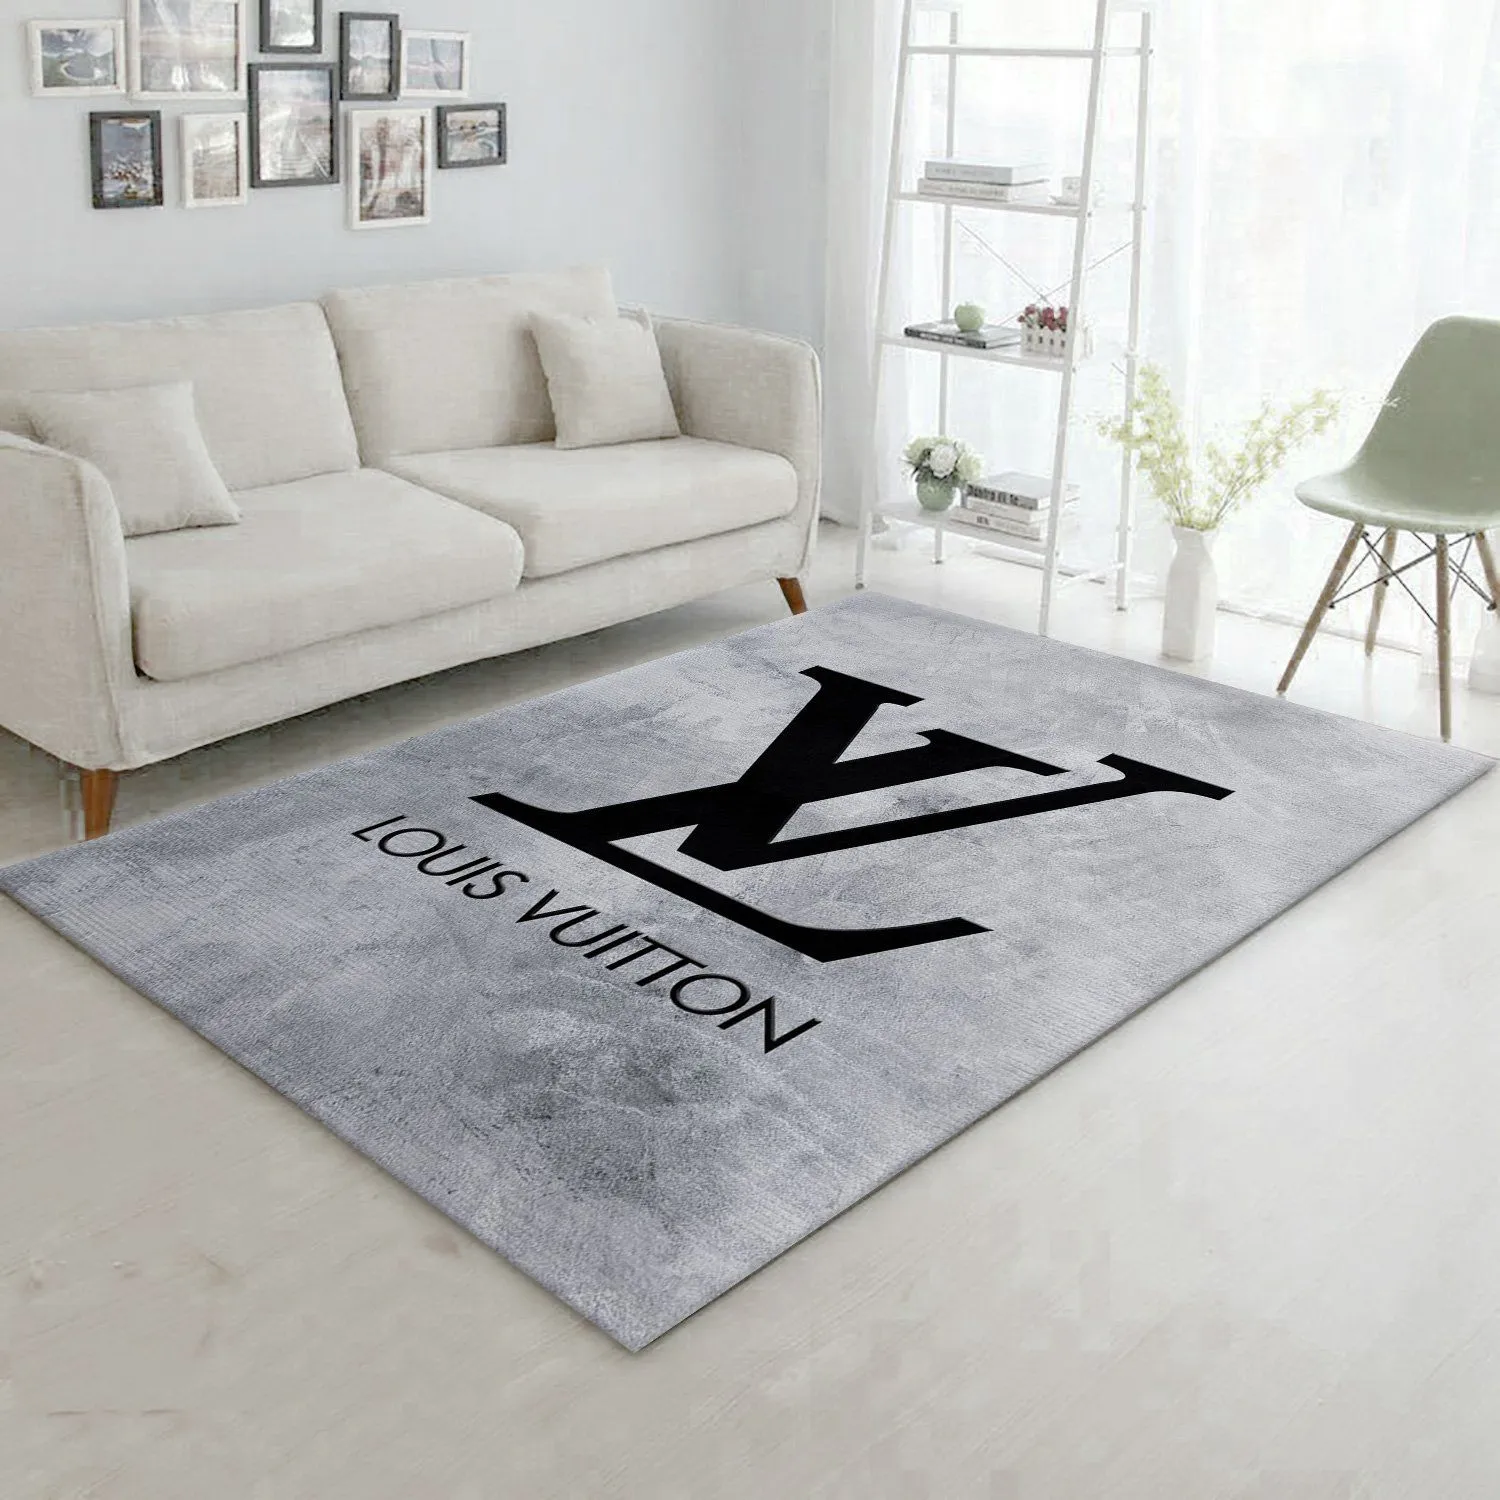 Louis vuitton Rectangle Rug Home Decor Door Mat Luxury Fashion Brand Area Carpet